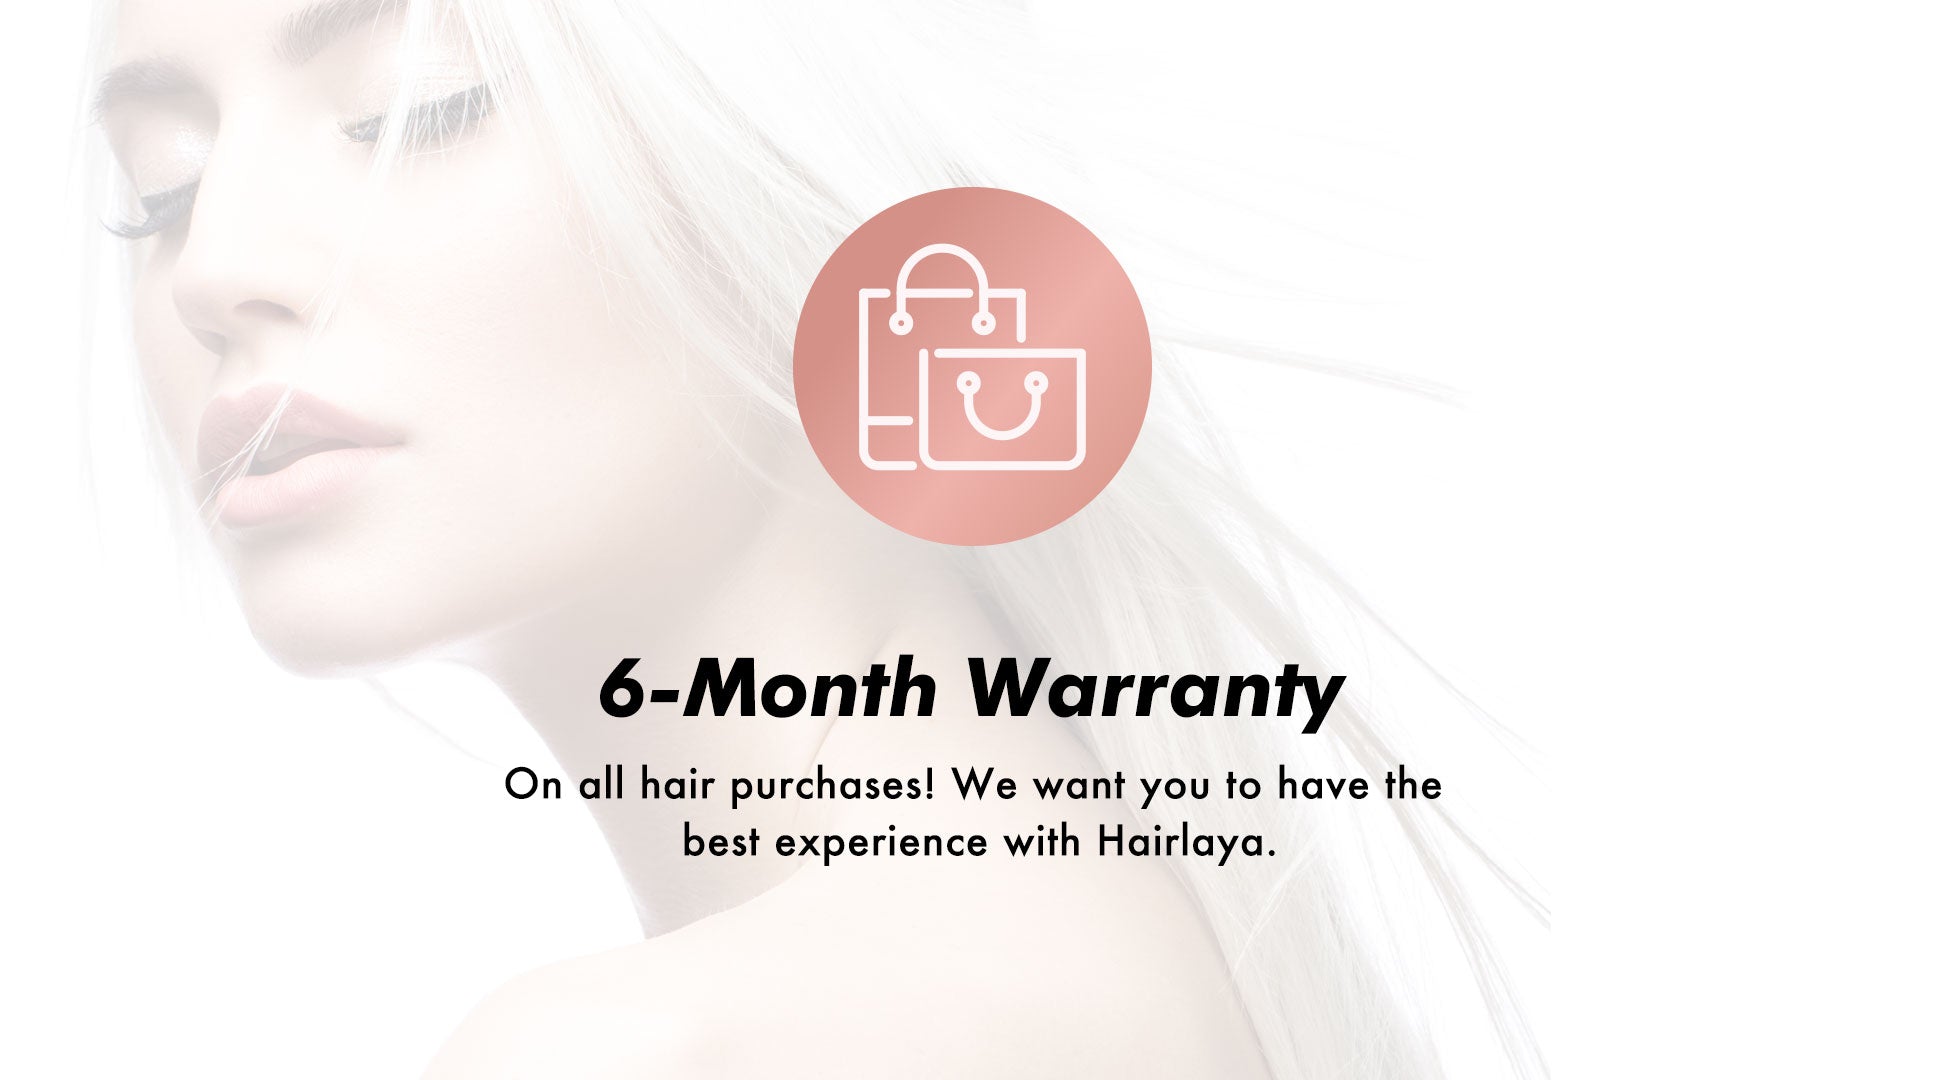 Hairlaya 6-Month Warranty